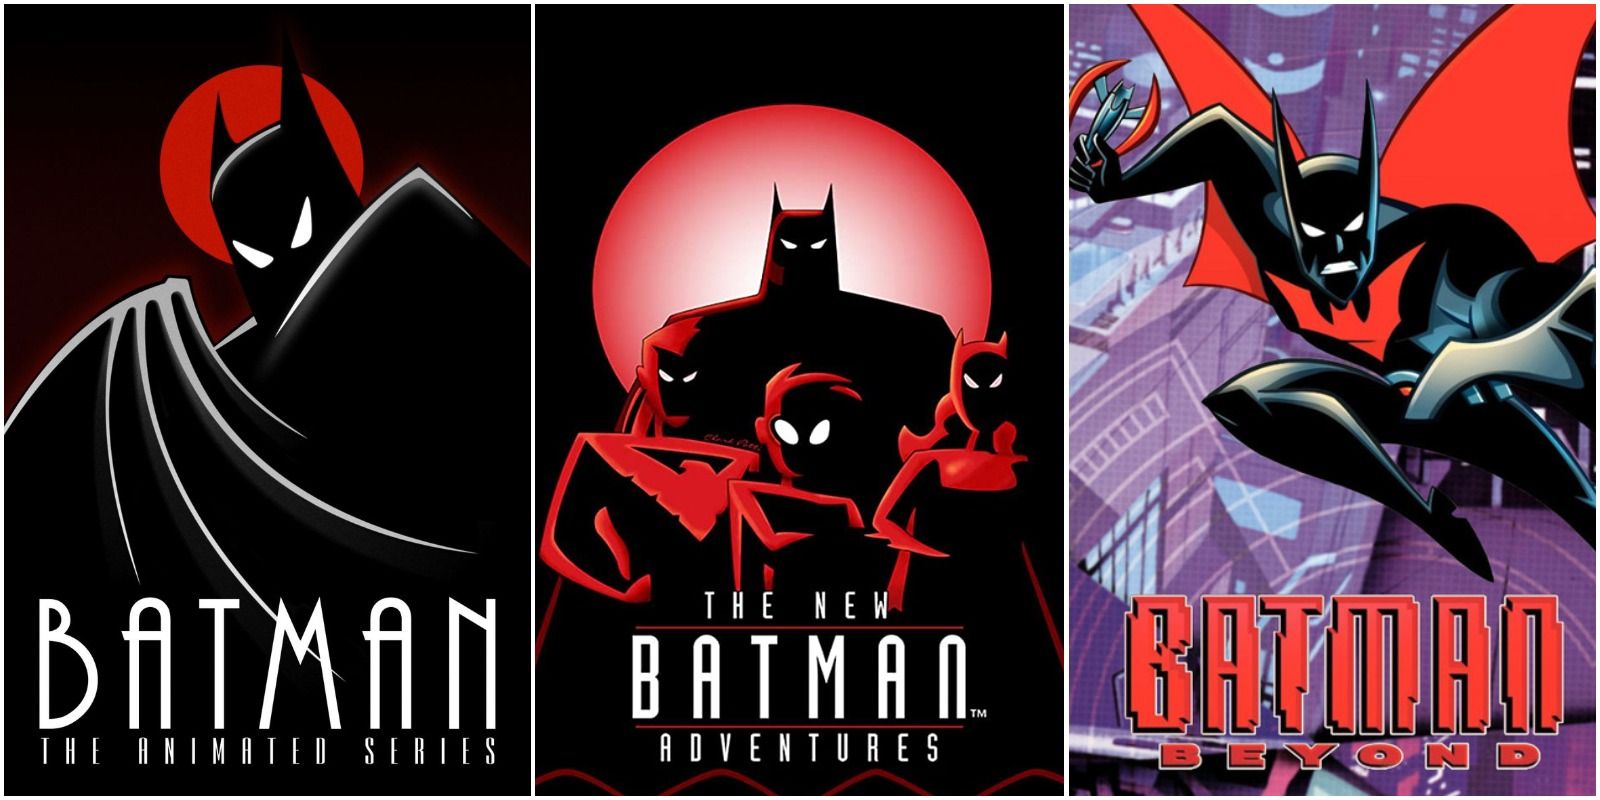 Batman: The Animated Series, The New Batman Adventures and Batman Beyond title cards